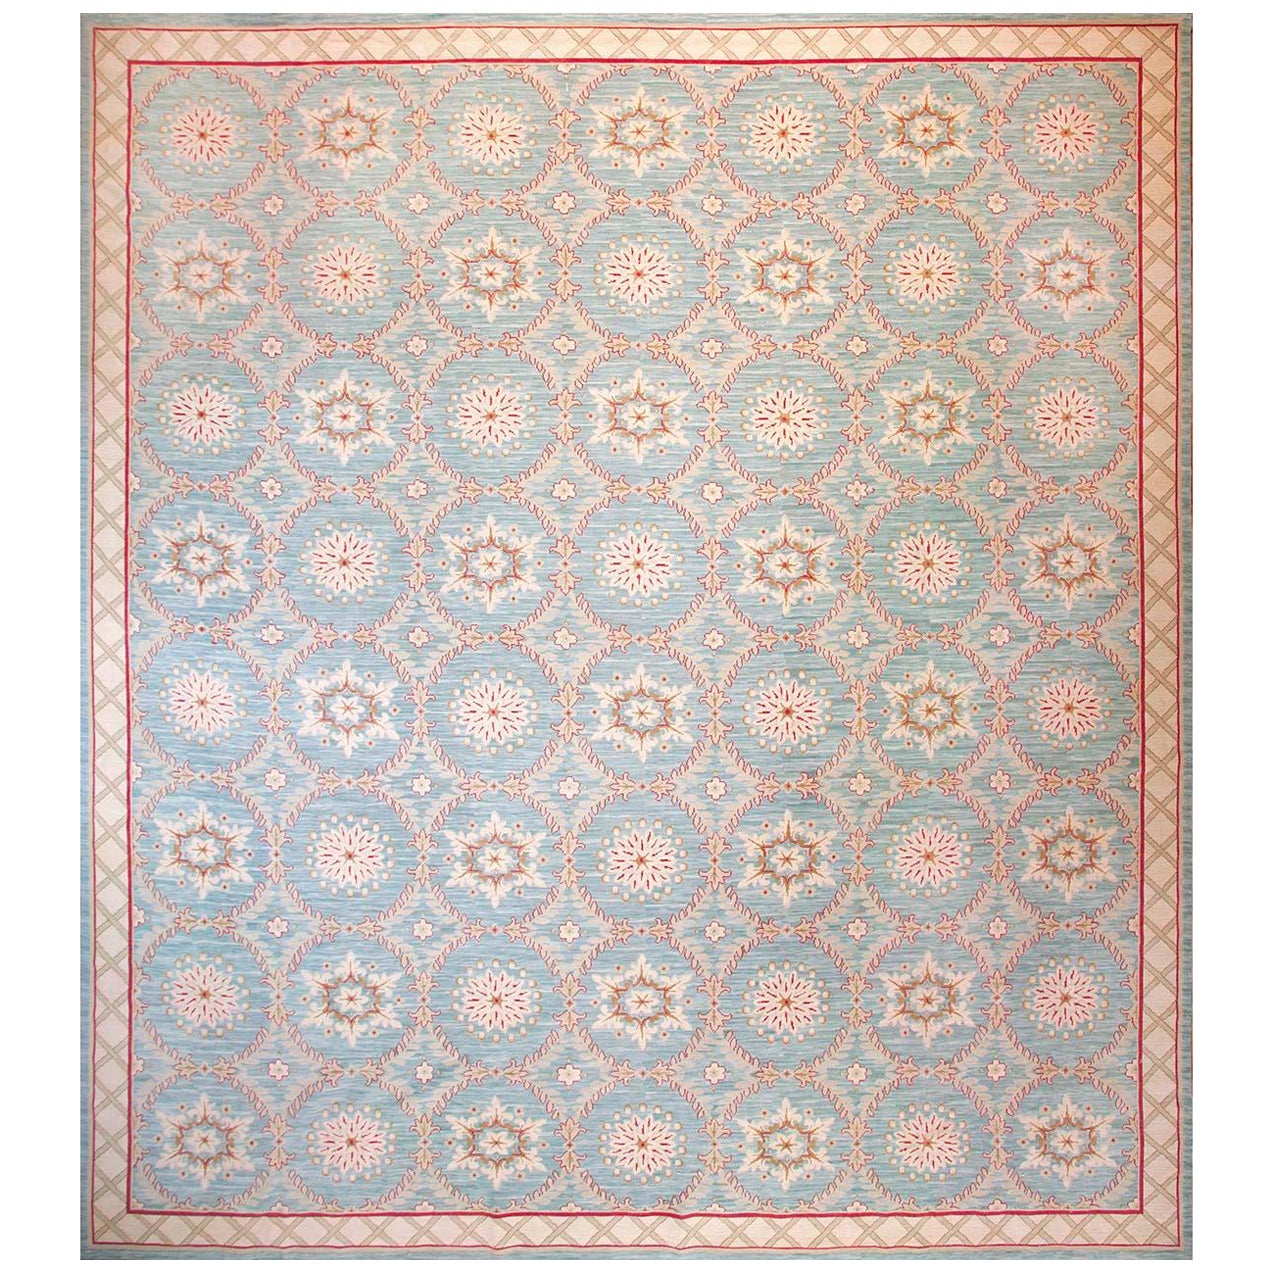  Contemporary Handwoven Needlepoint Flat Weave Carpet (6' x 9' 183 x 274 cm)